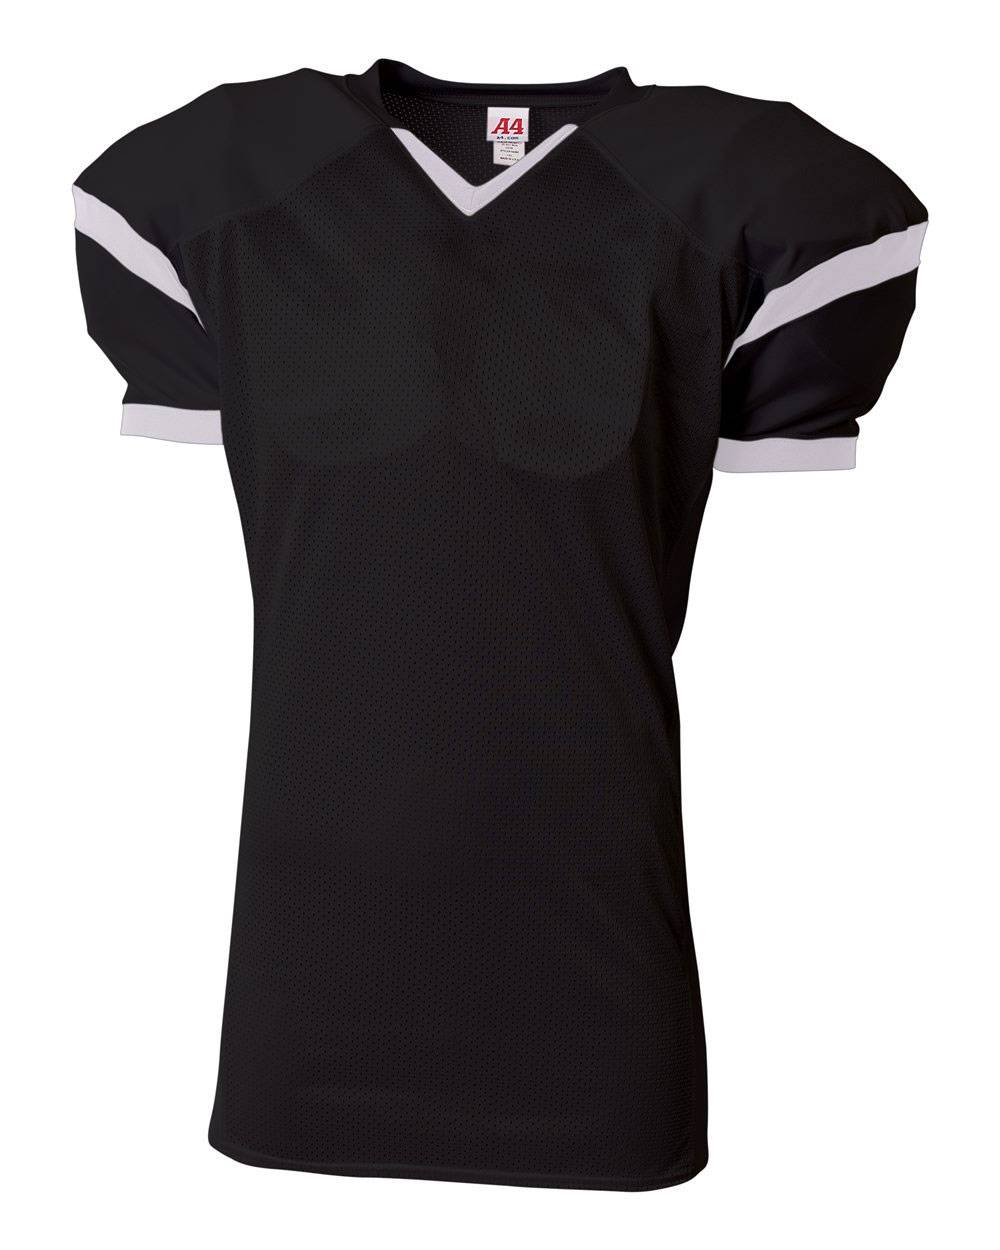 black football jersey blank